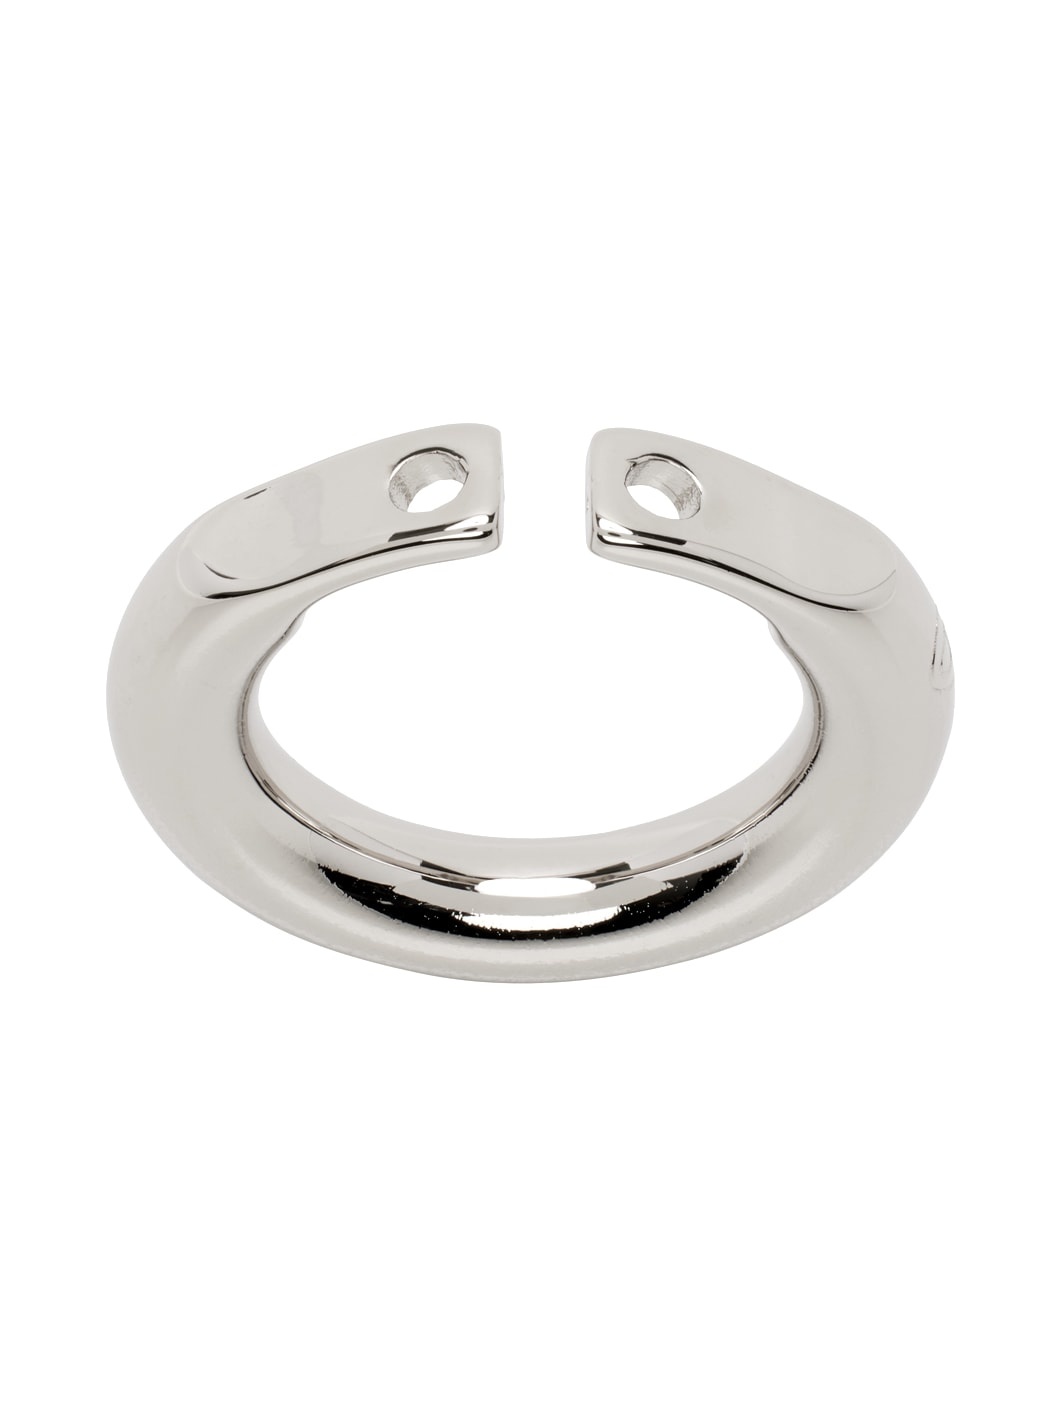 Silver Bar & Chain Ring - 1